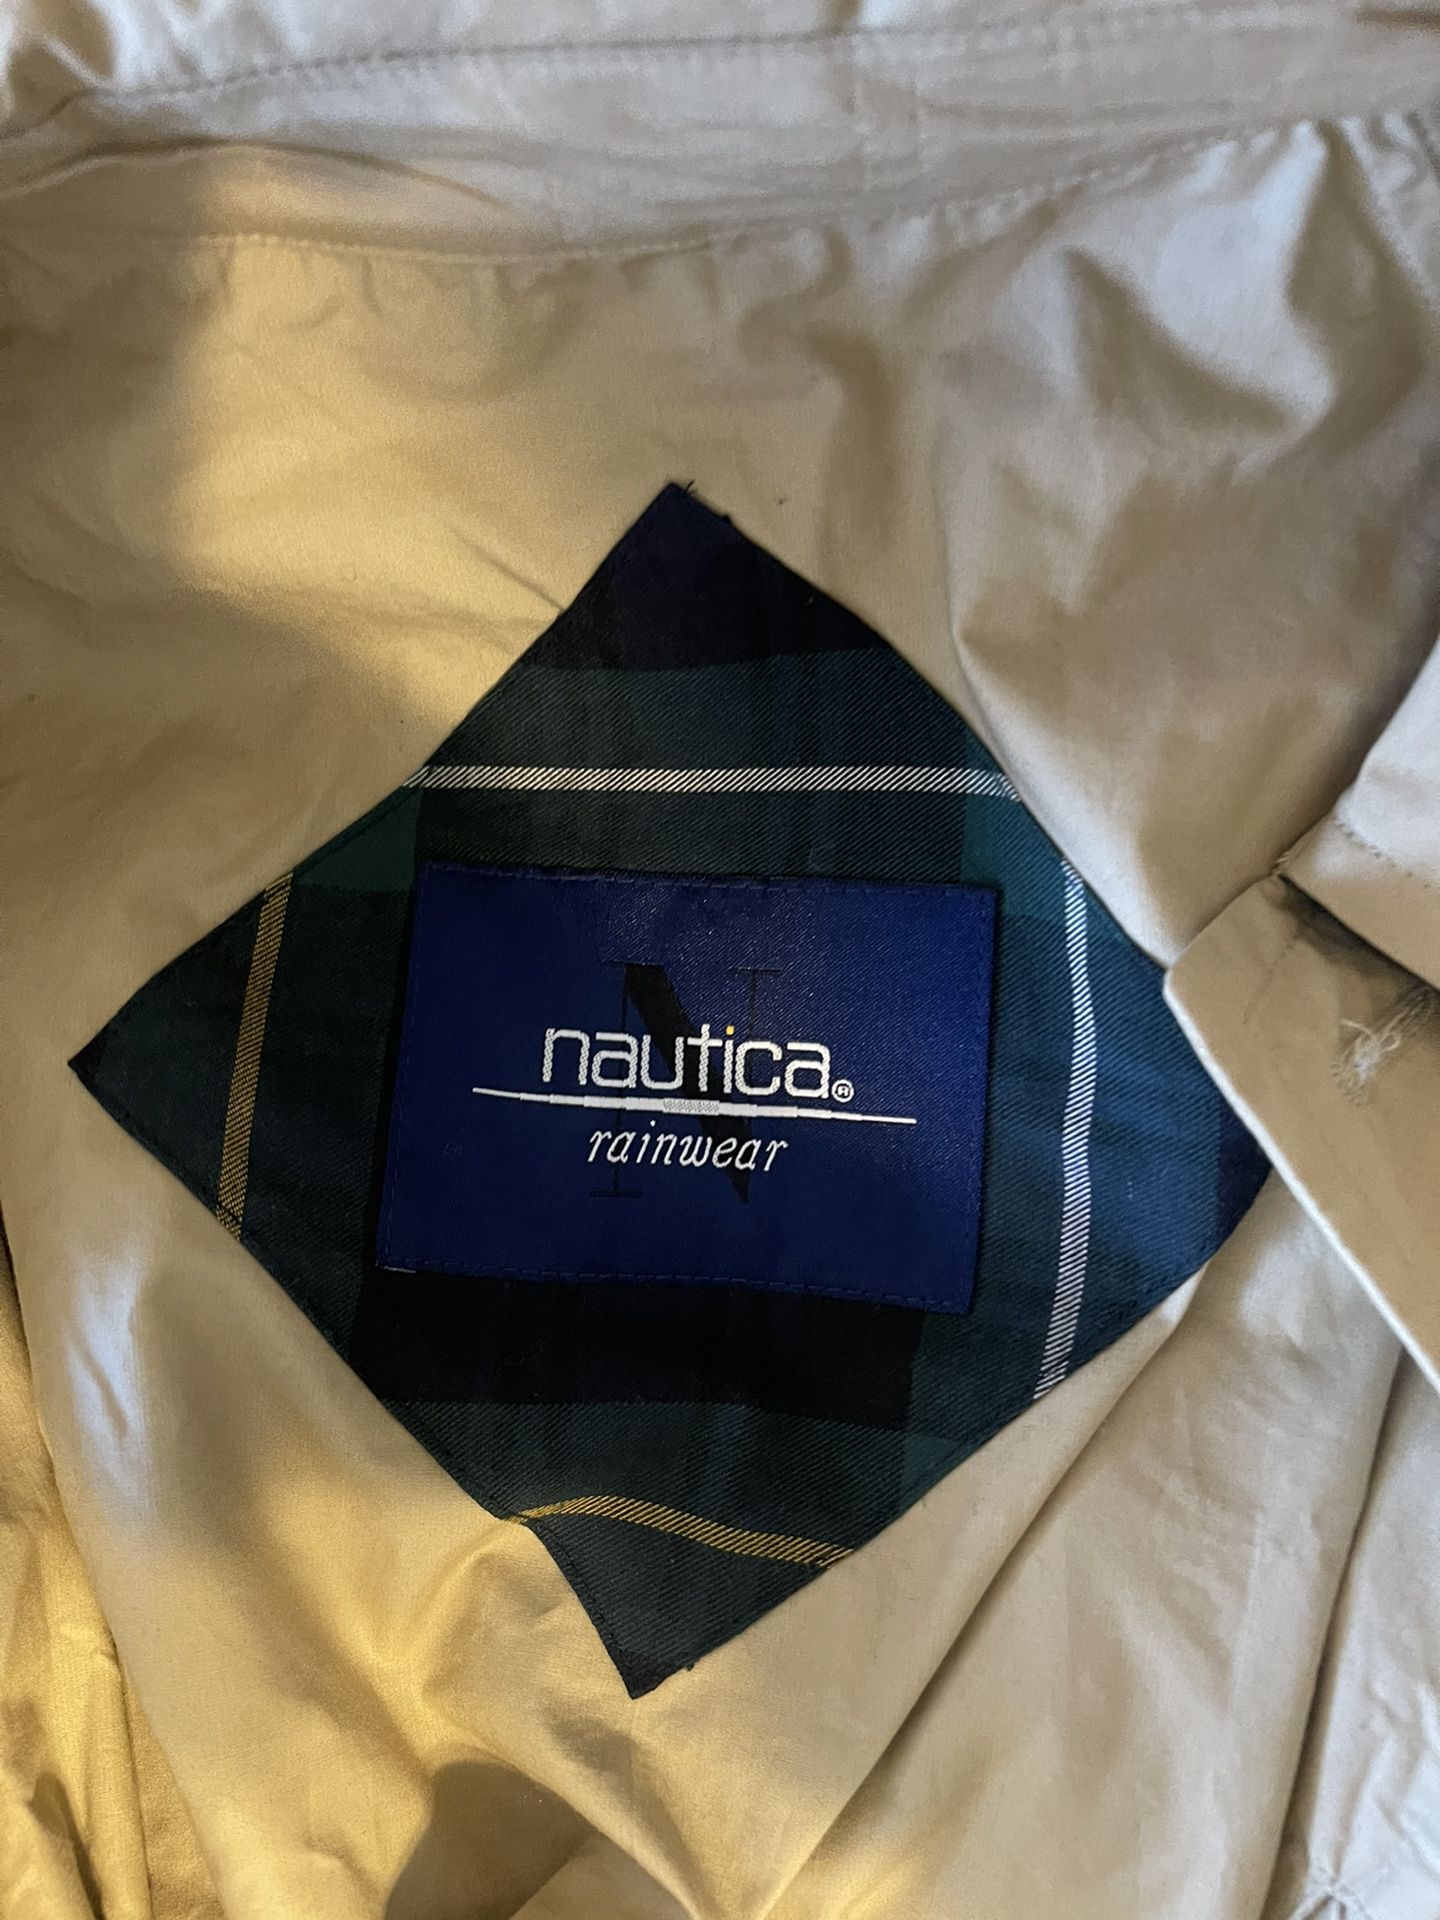 Nautica rainwear traveler raincoat hundred percent cotton size XL never worn new with tags